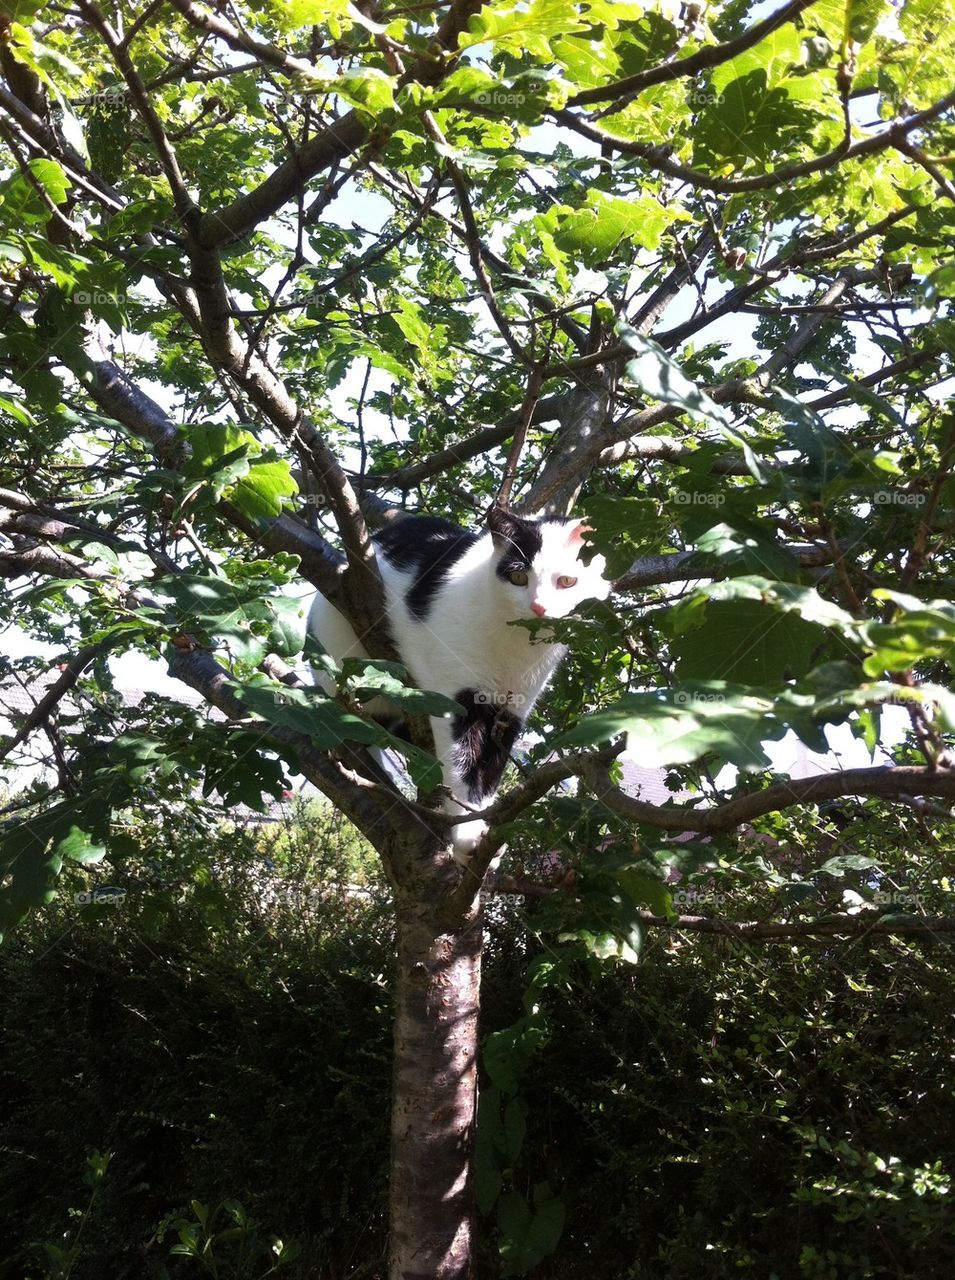 Cat up tree